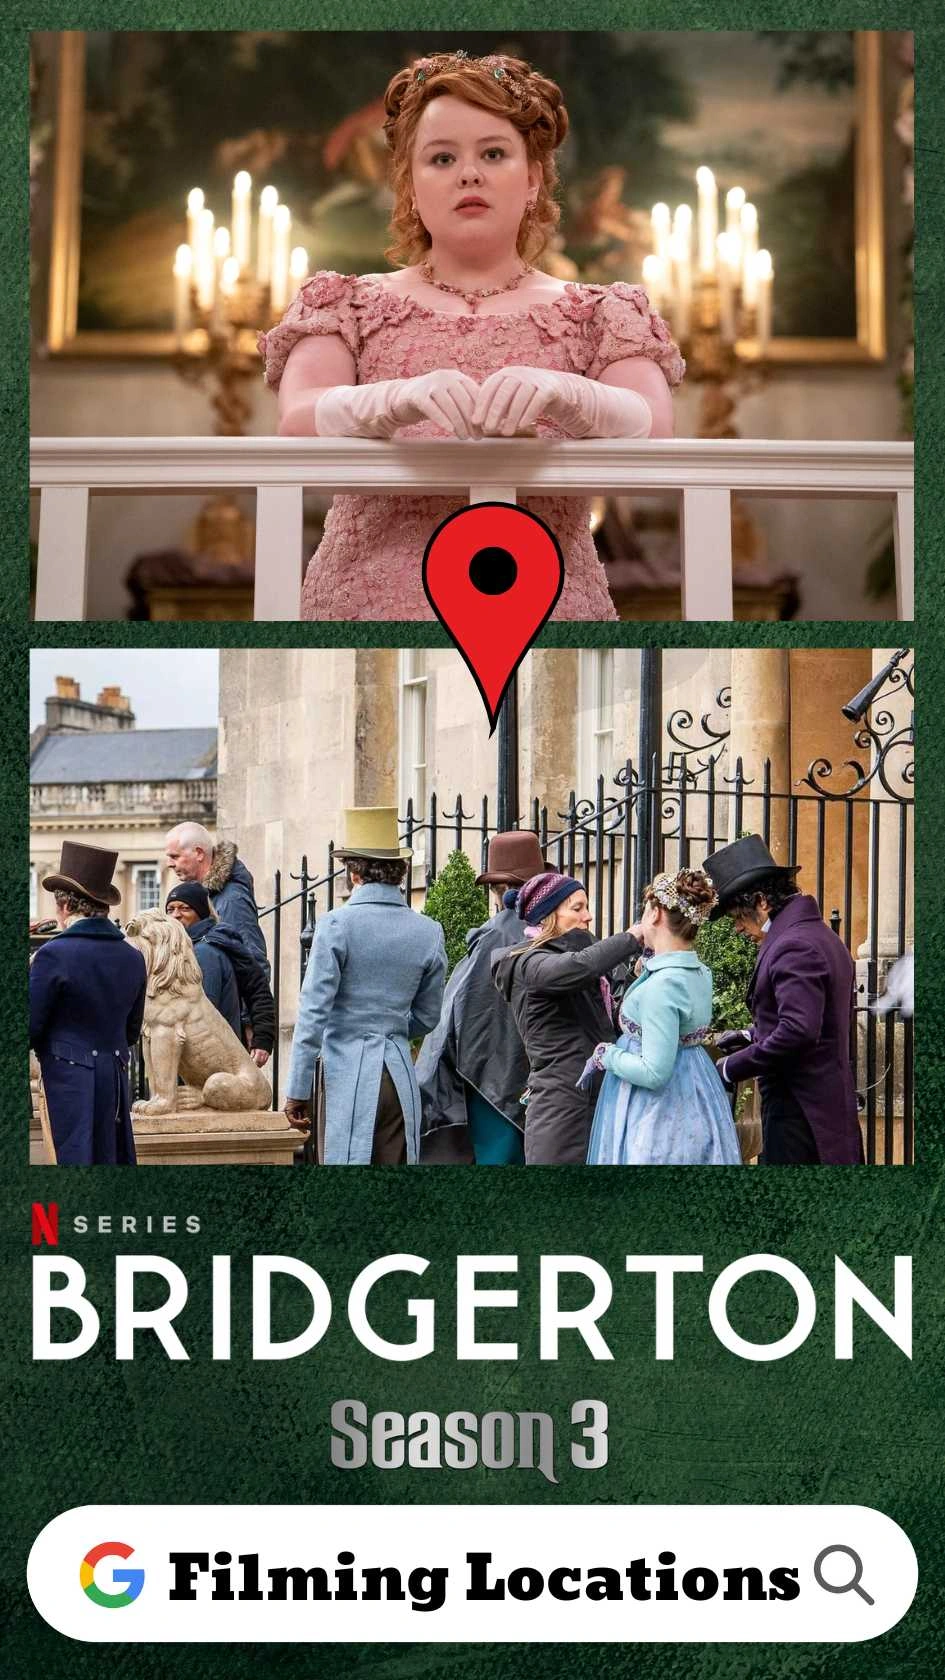 Bridgerton Season 3 Filming Locations